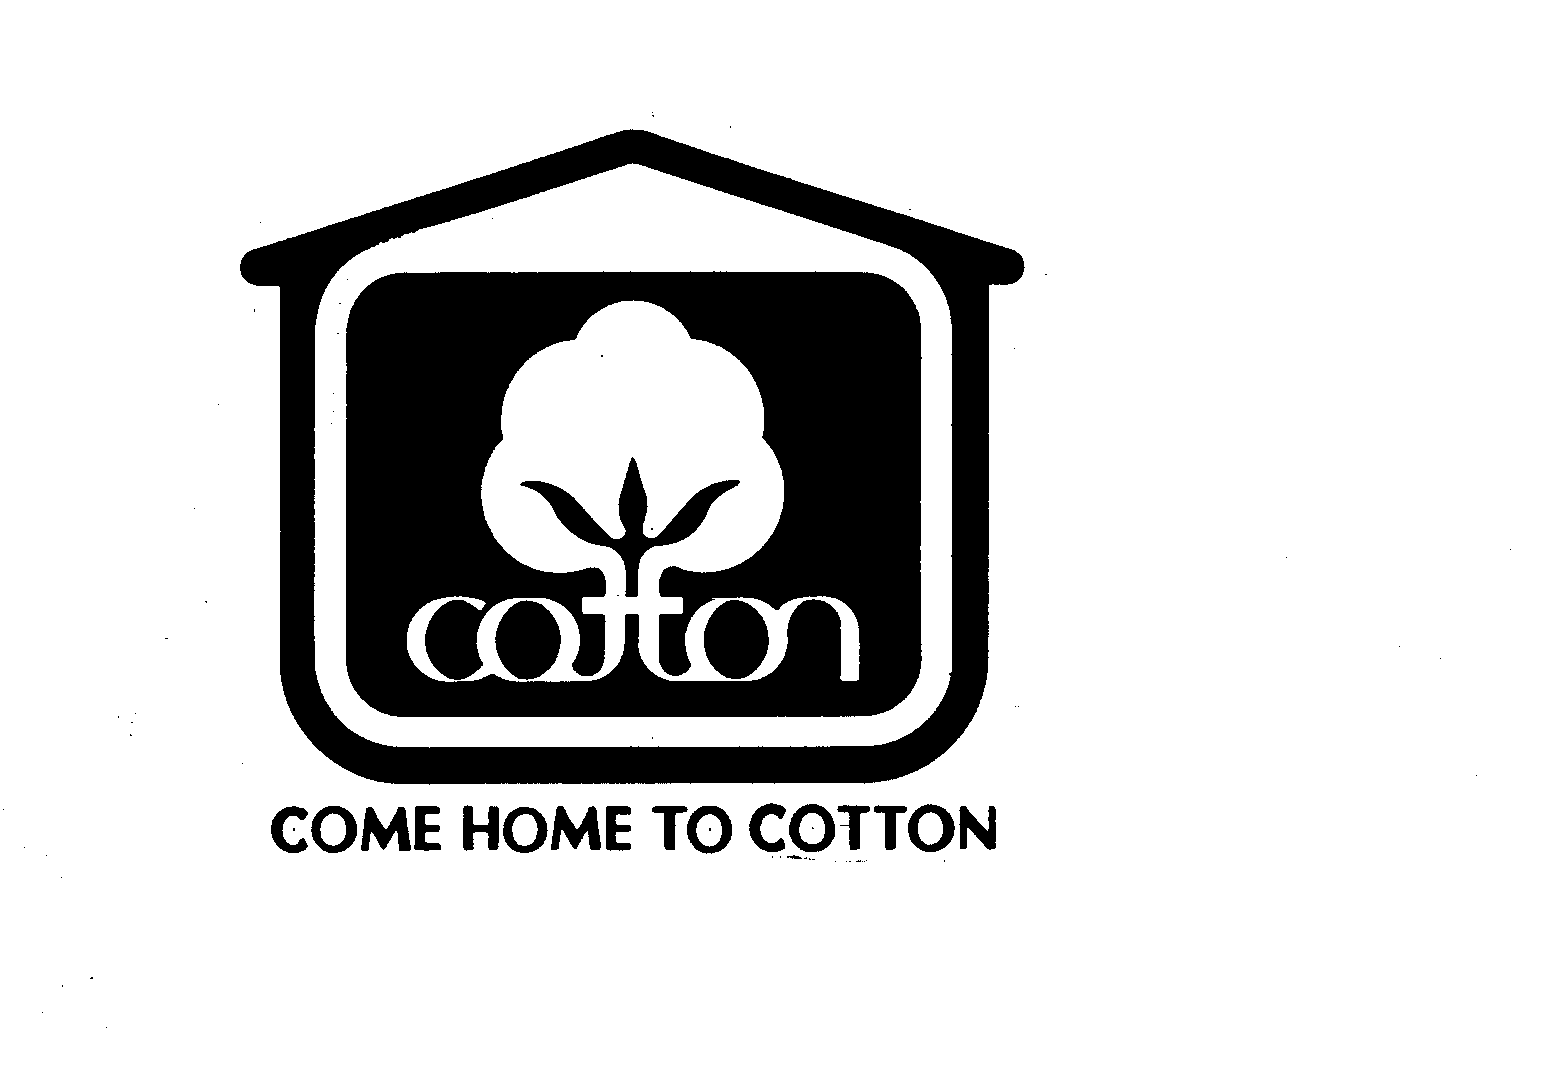  COTTON COME HOME TO COTTON